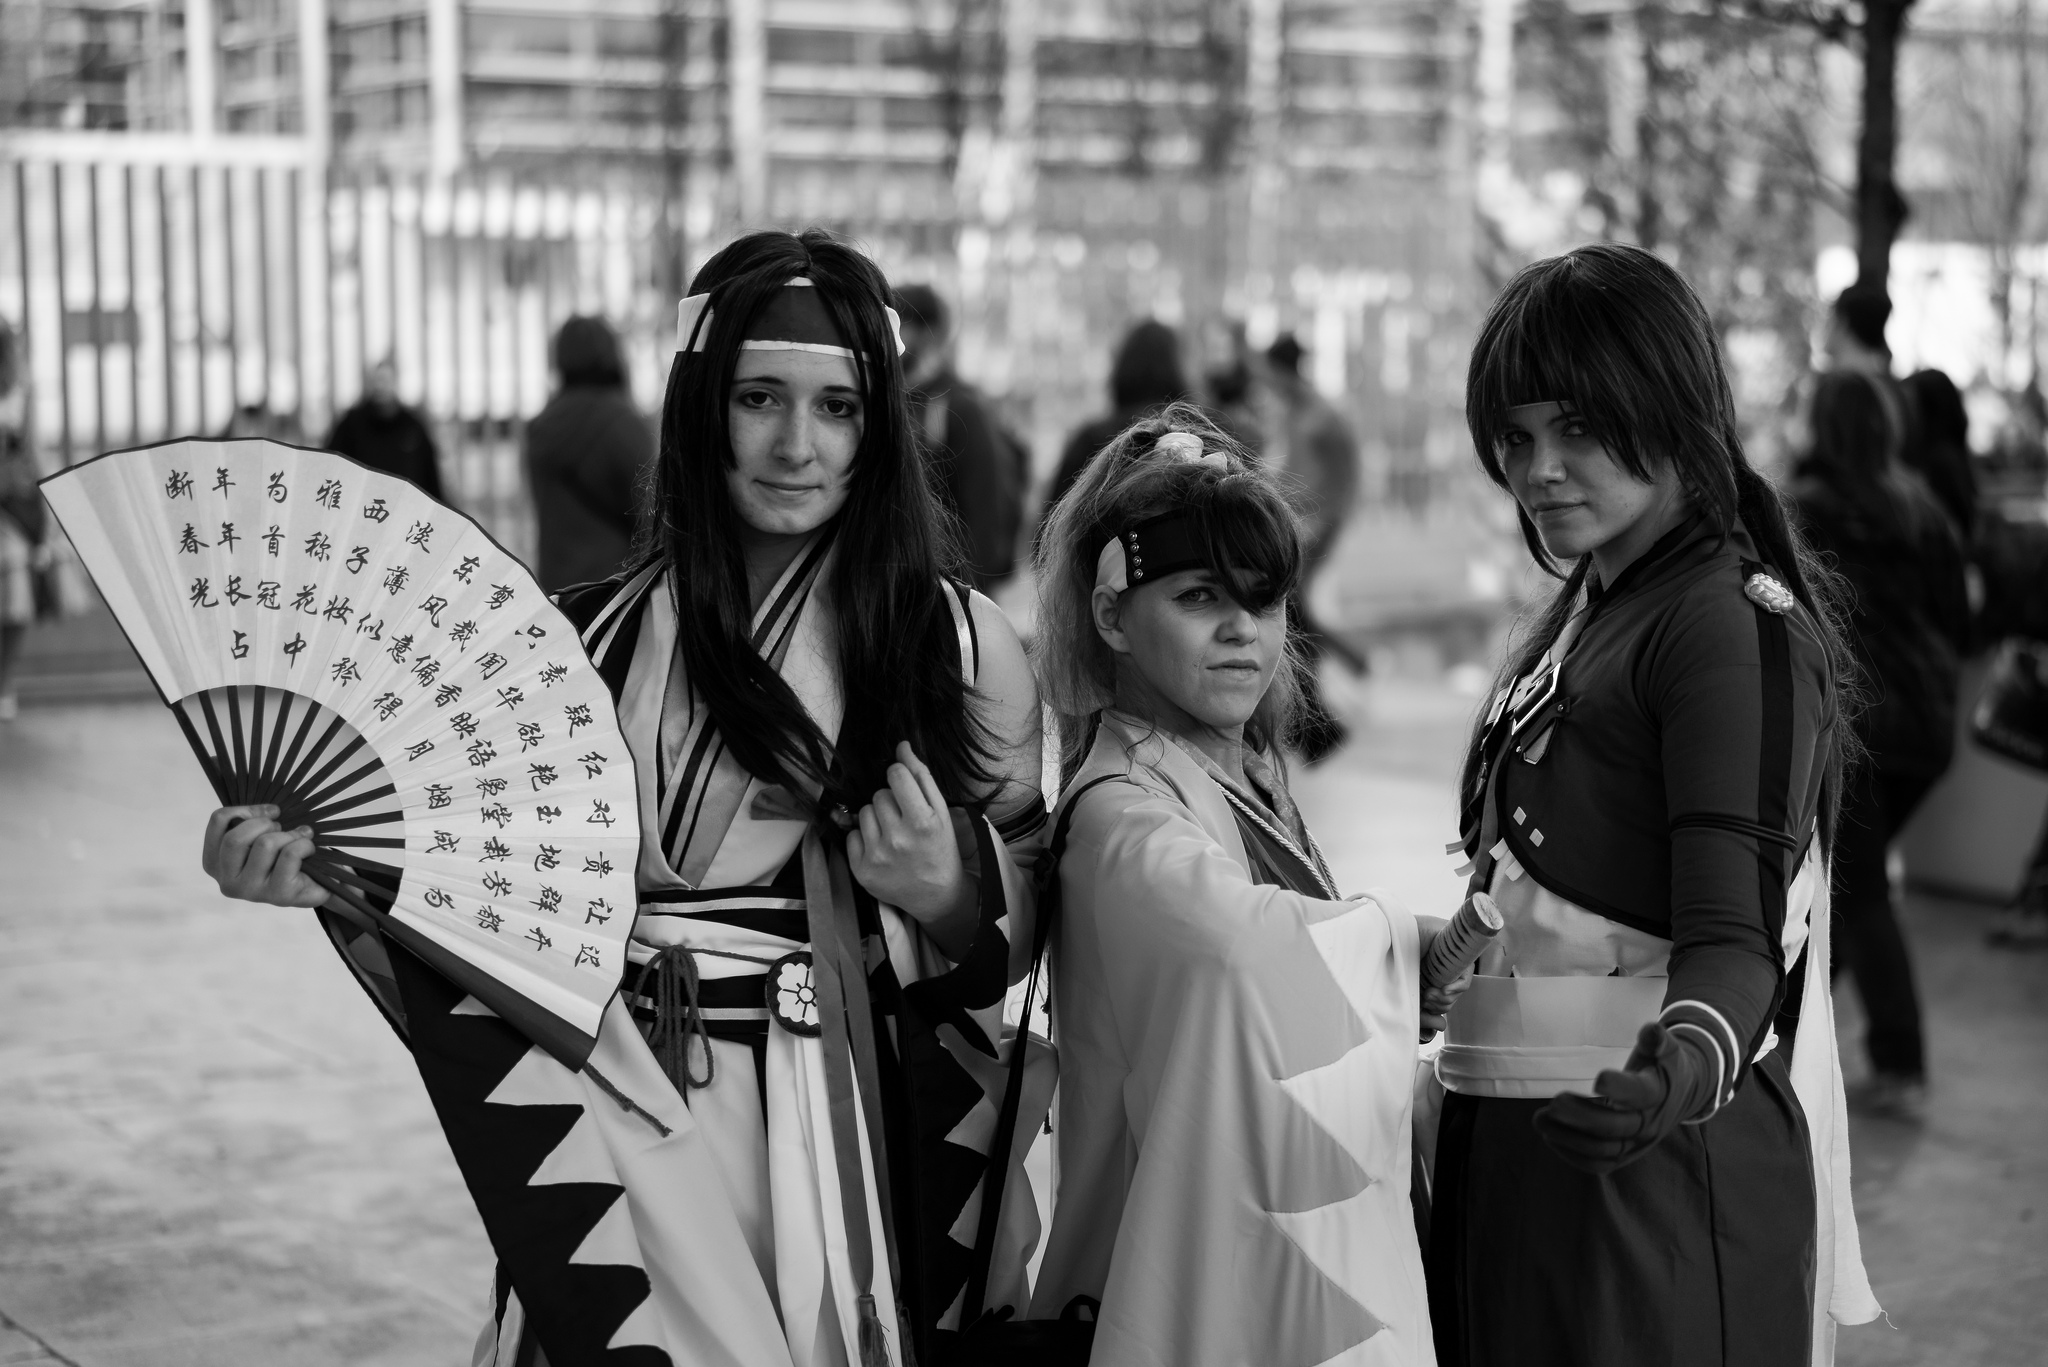 Three teenage girls pose in samurai cosplay outfits.